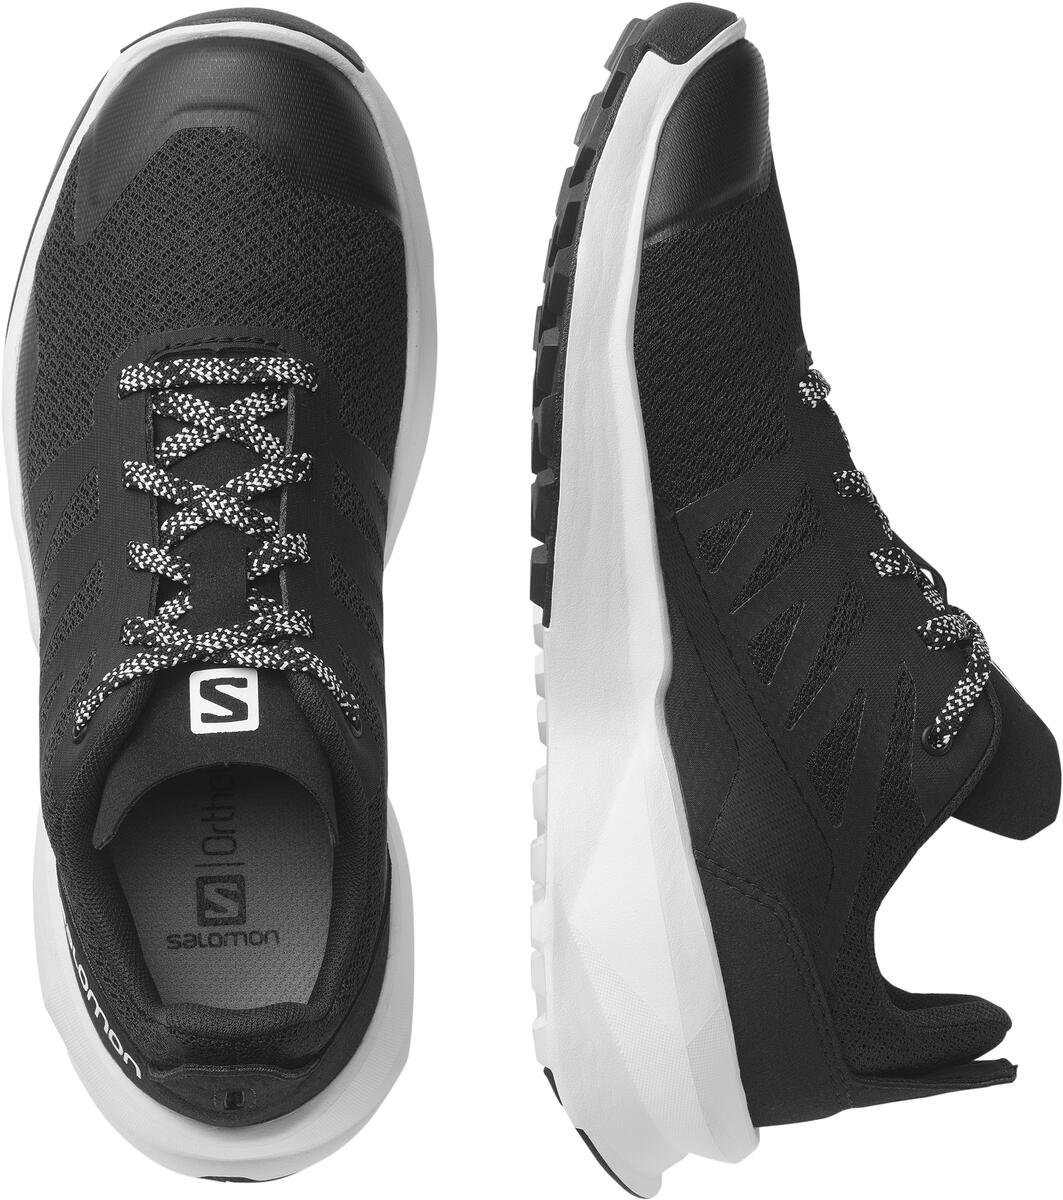 Topánky Salomon PATROL J - čierna/biela